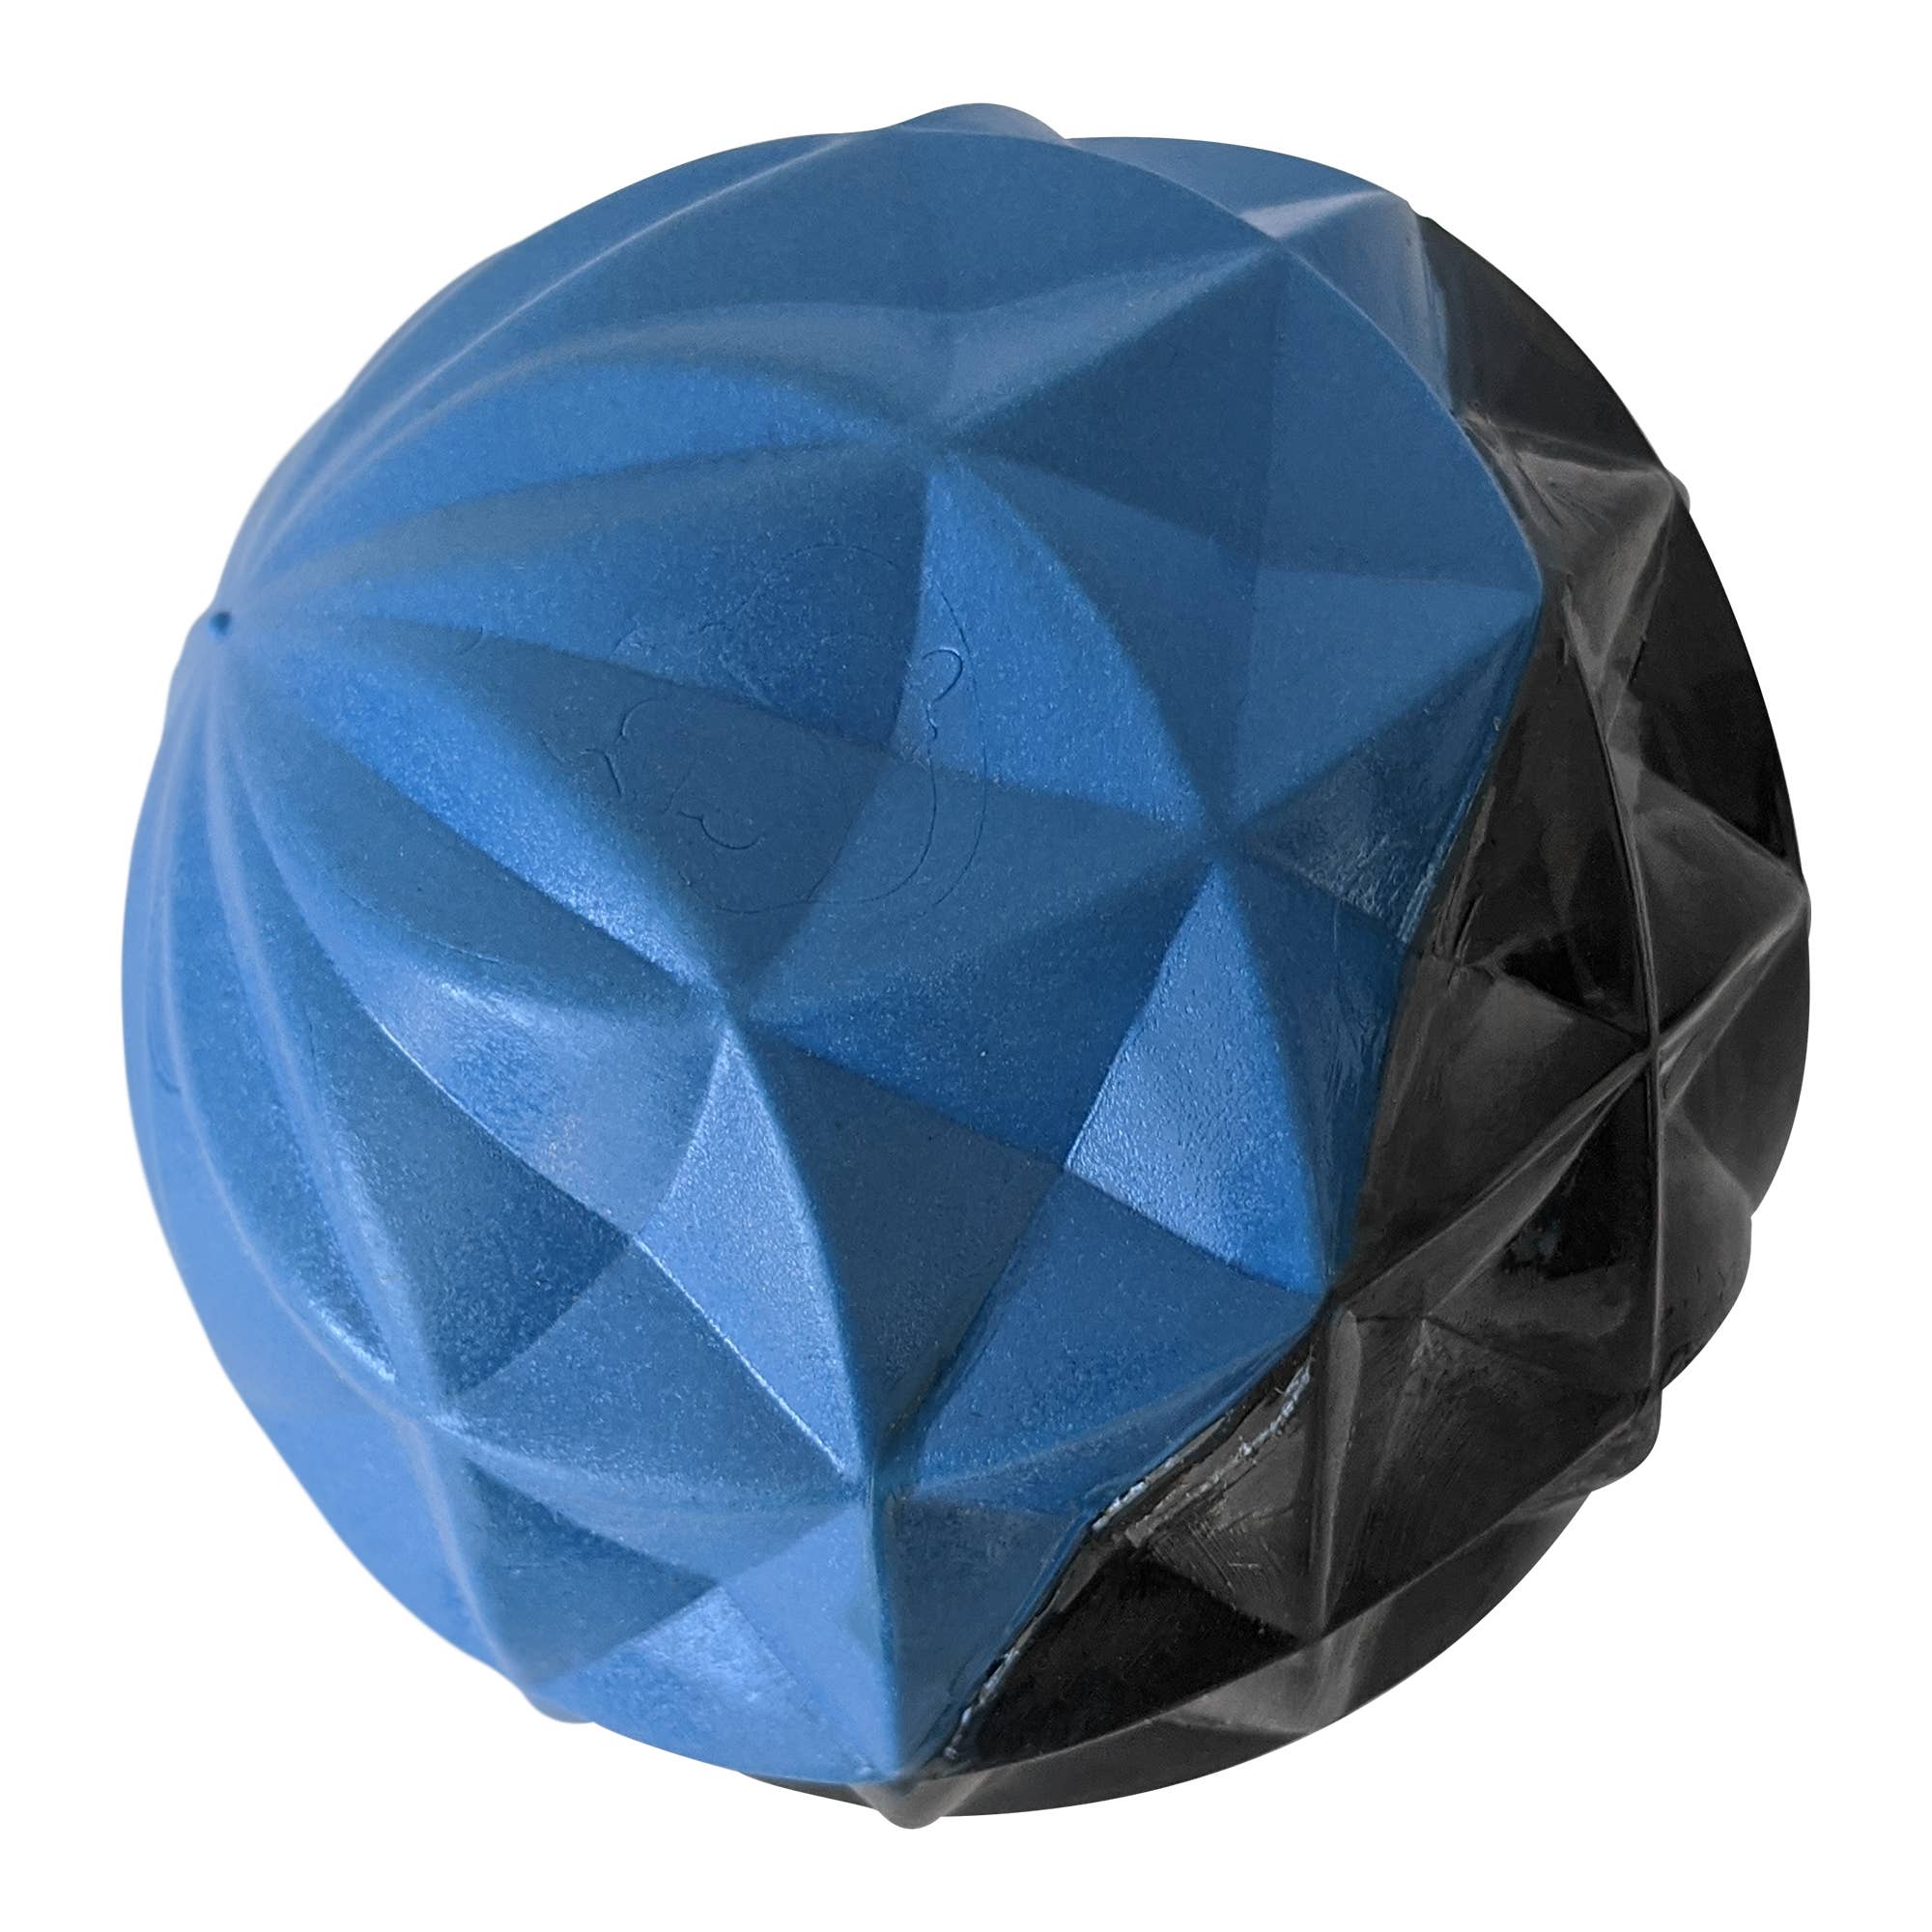 Geometric Design Textured Ball Dog Chew Toy - Large | Amber Blackberry